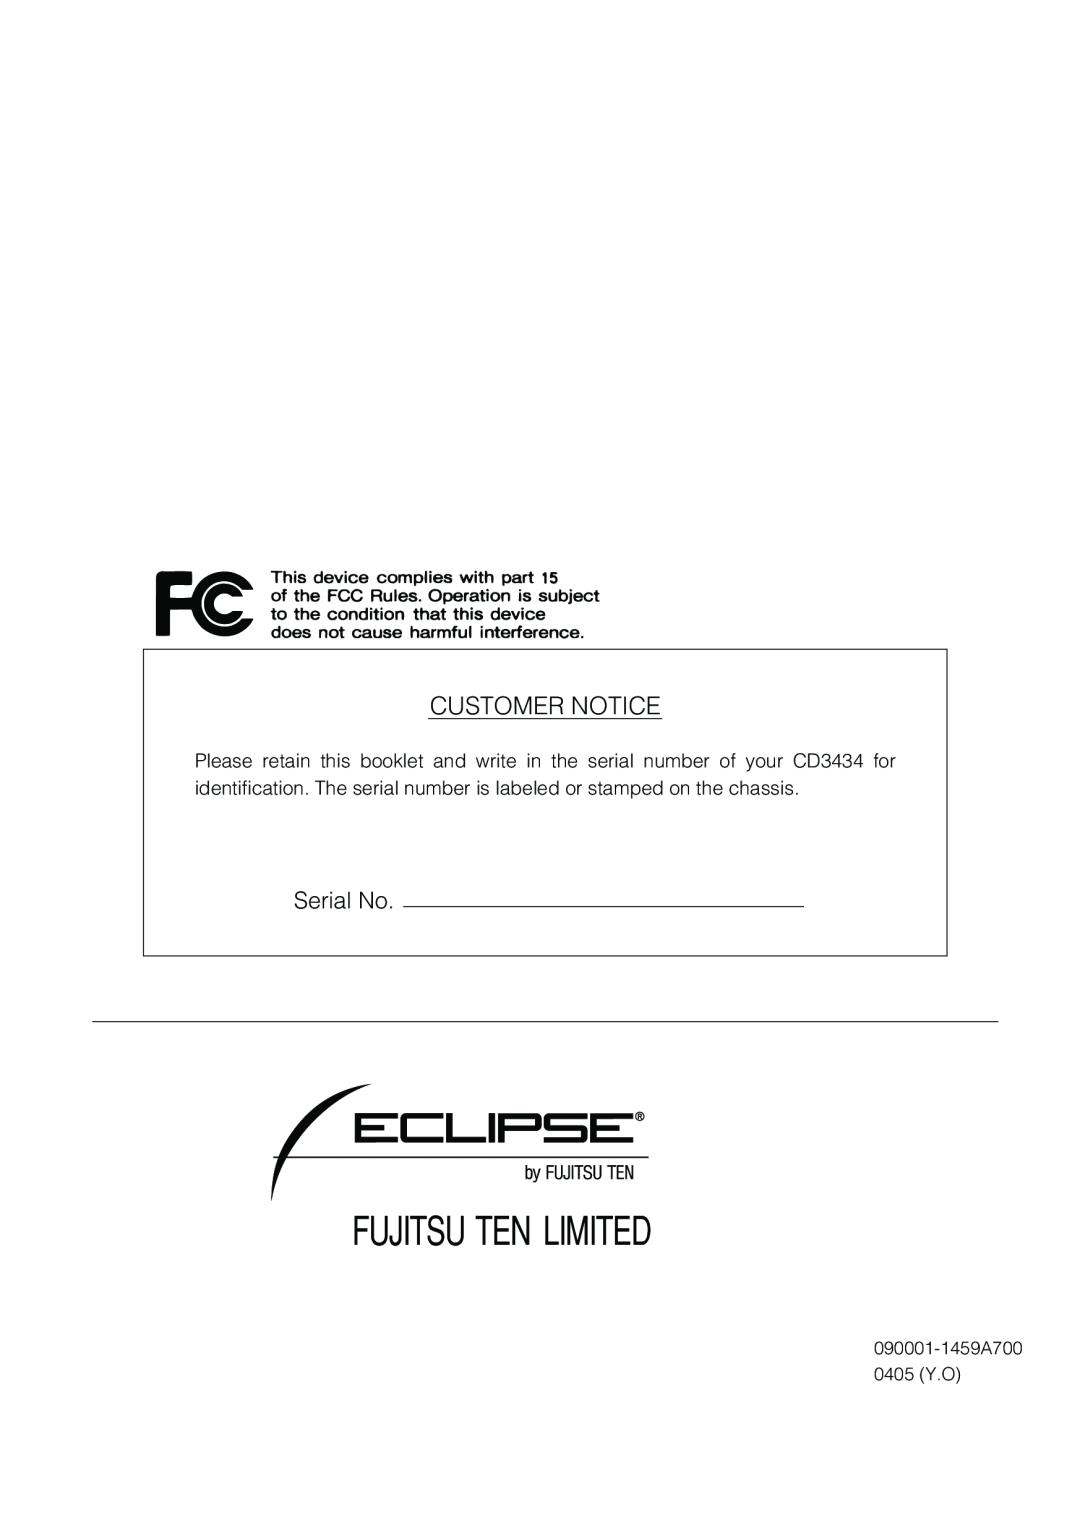 Eclipse - Fujitsu Ten CD3434 owner manual Customer Notice, Fujitsu Ten Limited 